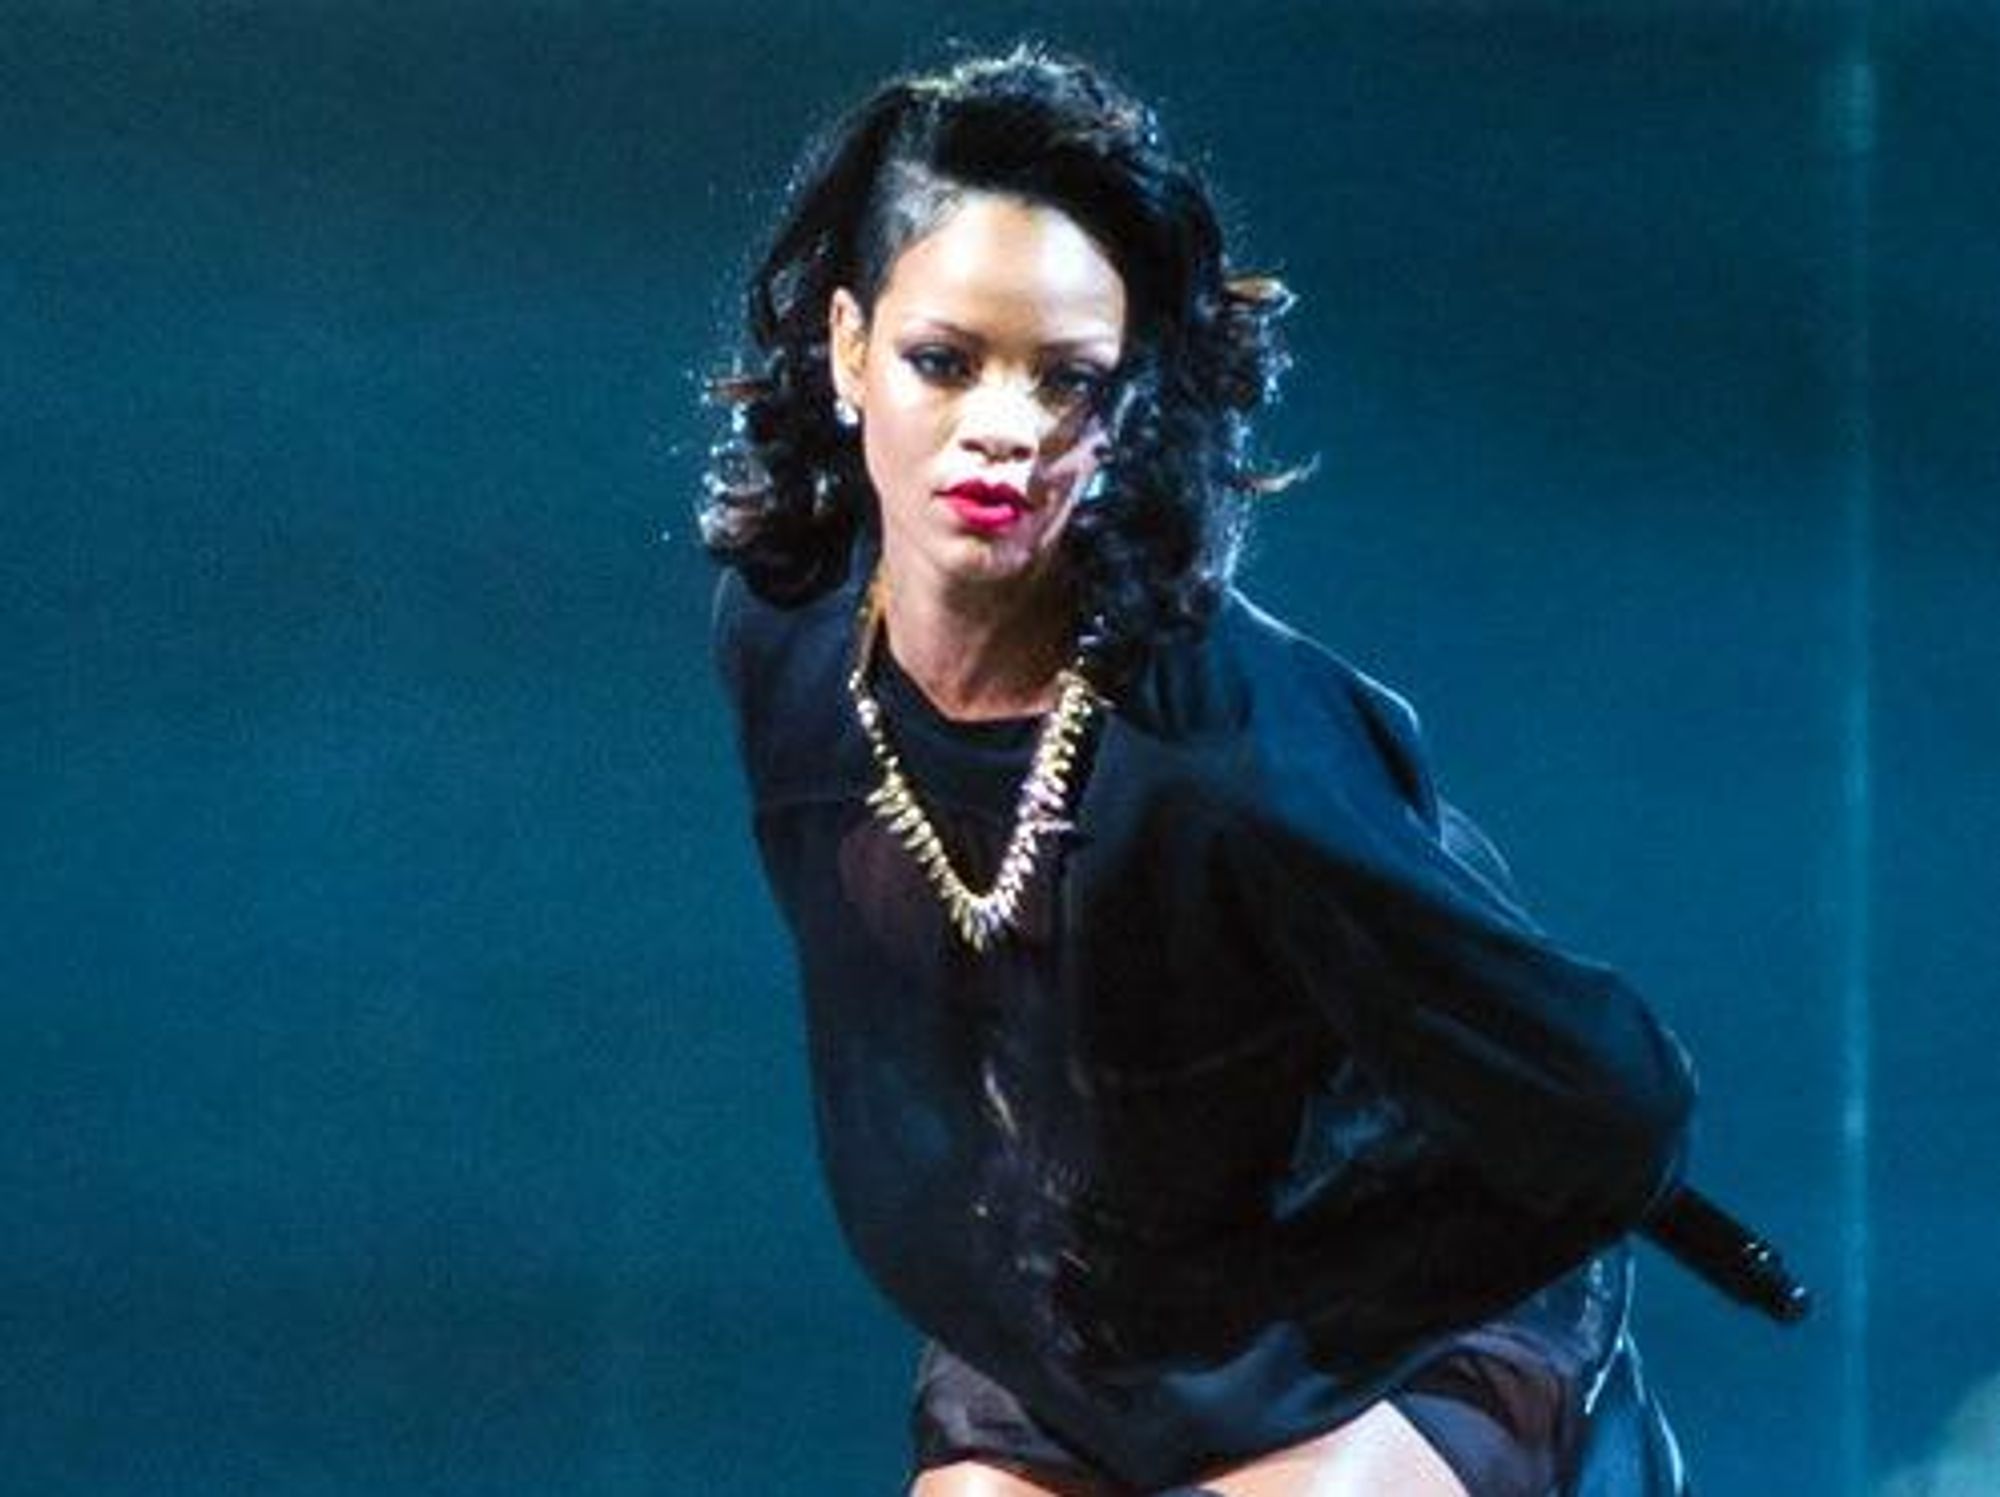 8 Rihanna in concert Houston November 2013